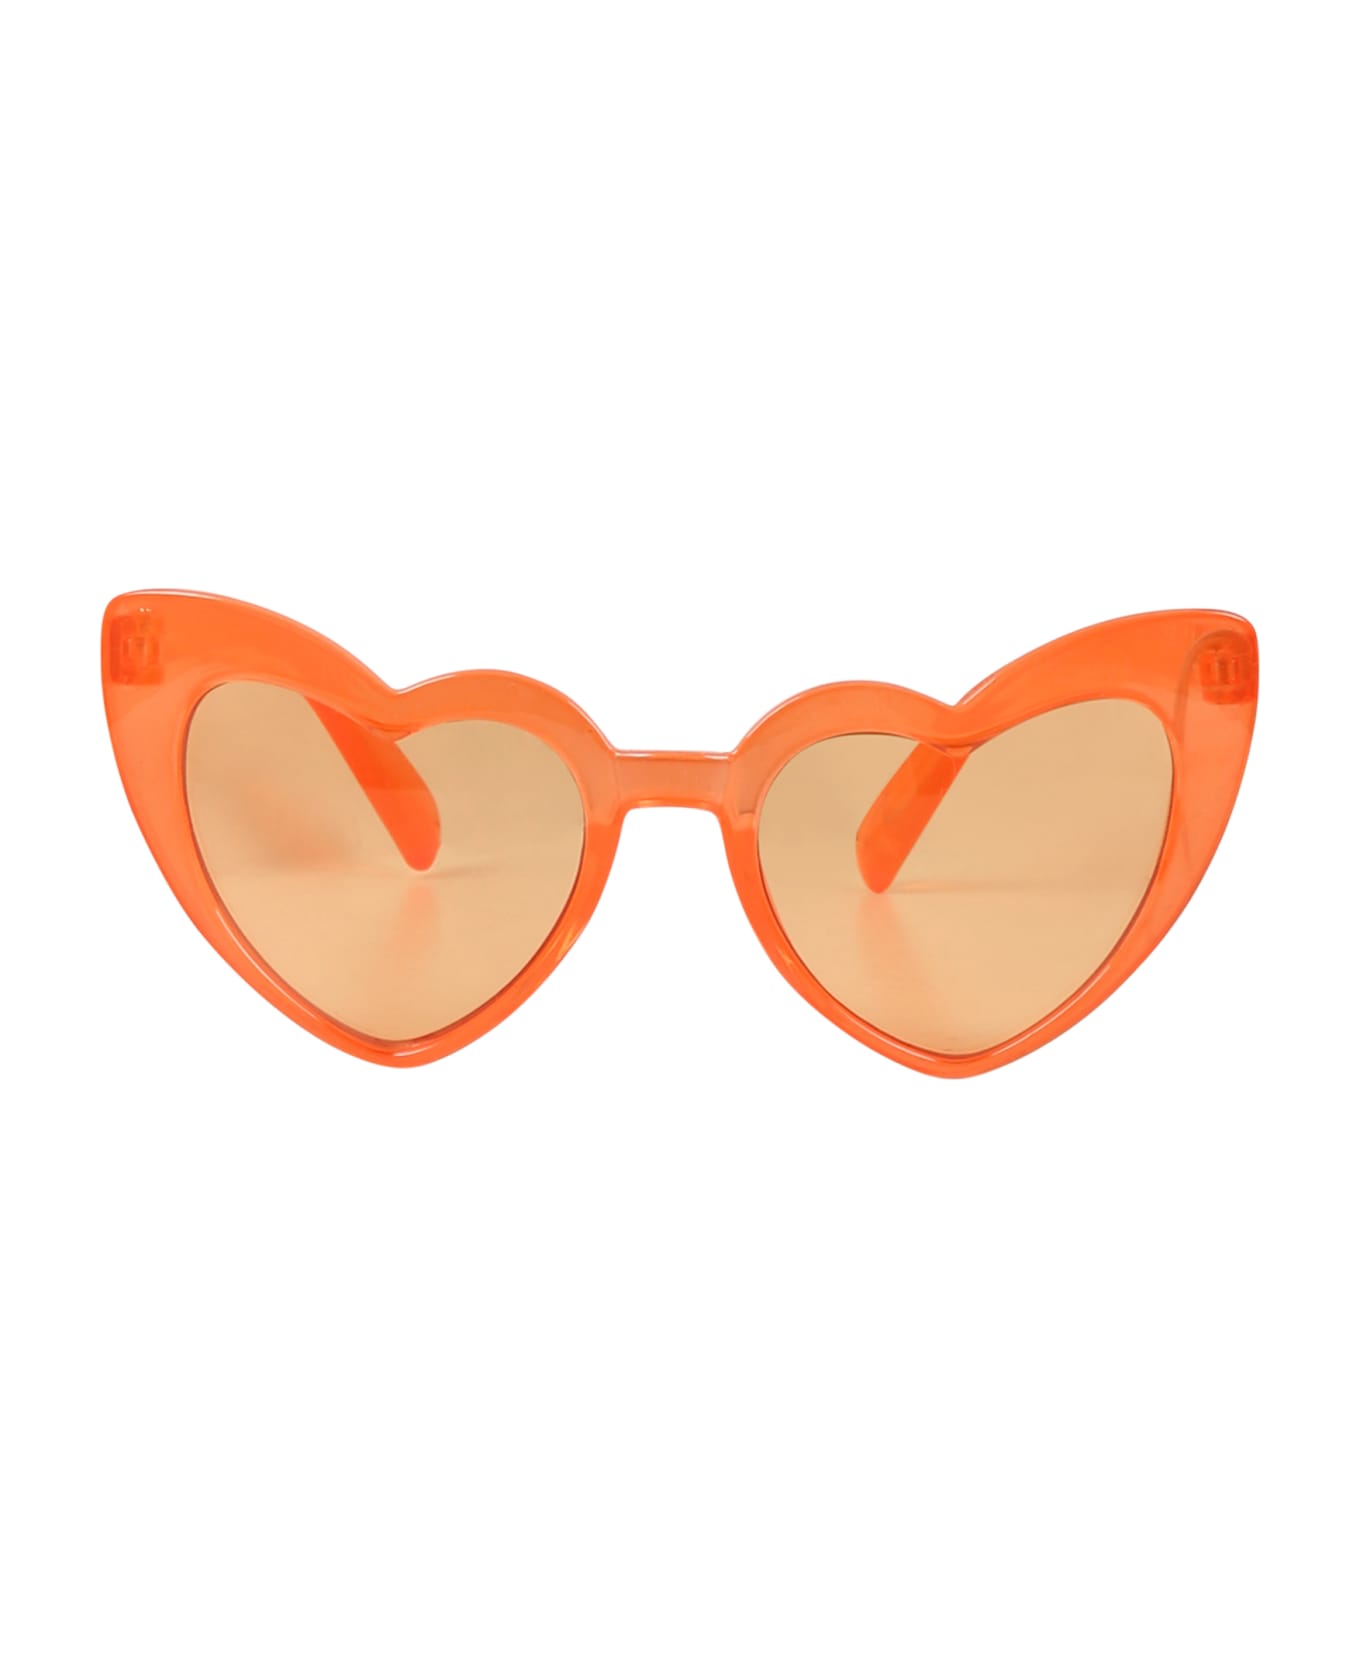 Molo Orange Sana Sunglasses For Girl - Orange